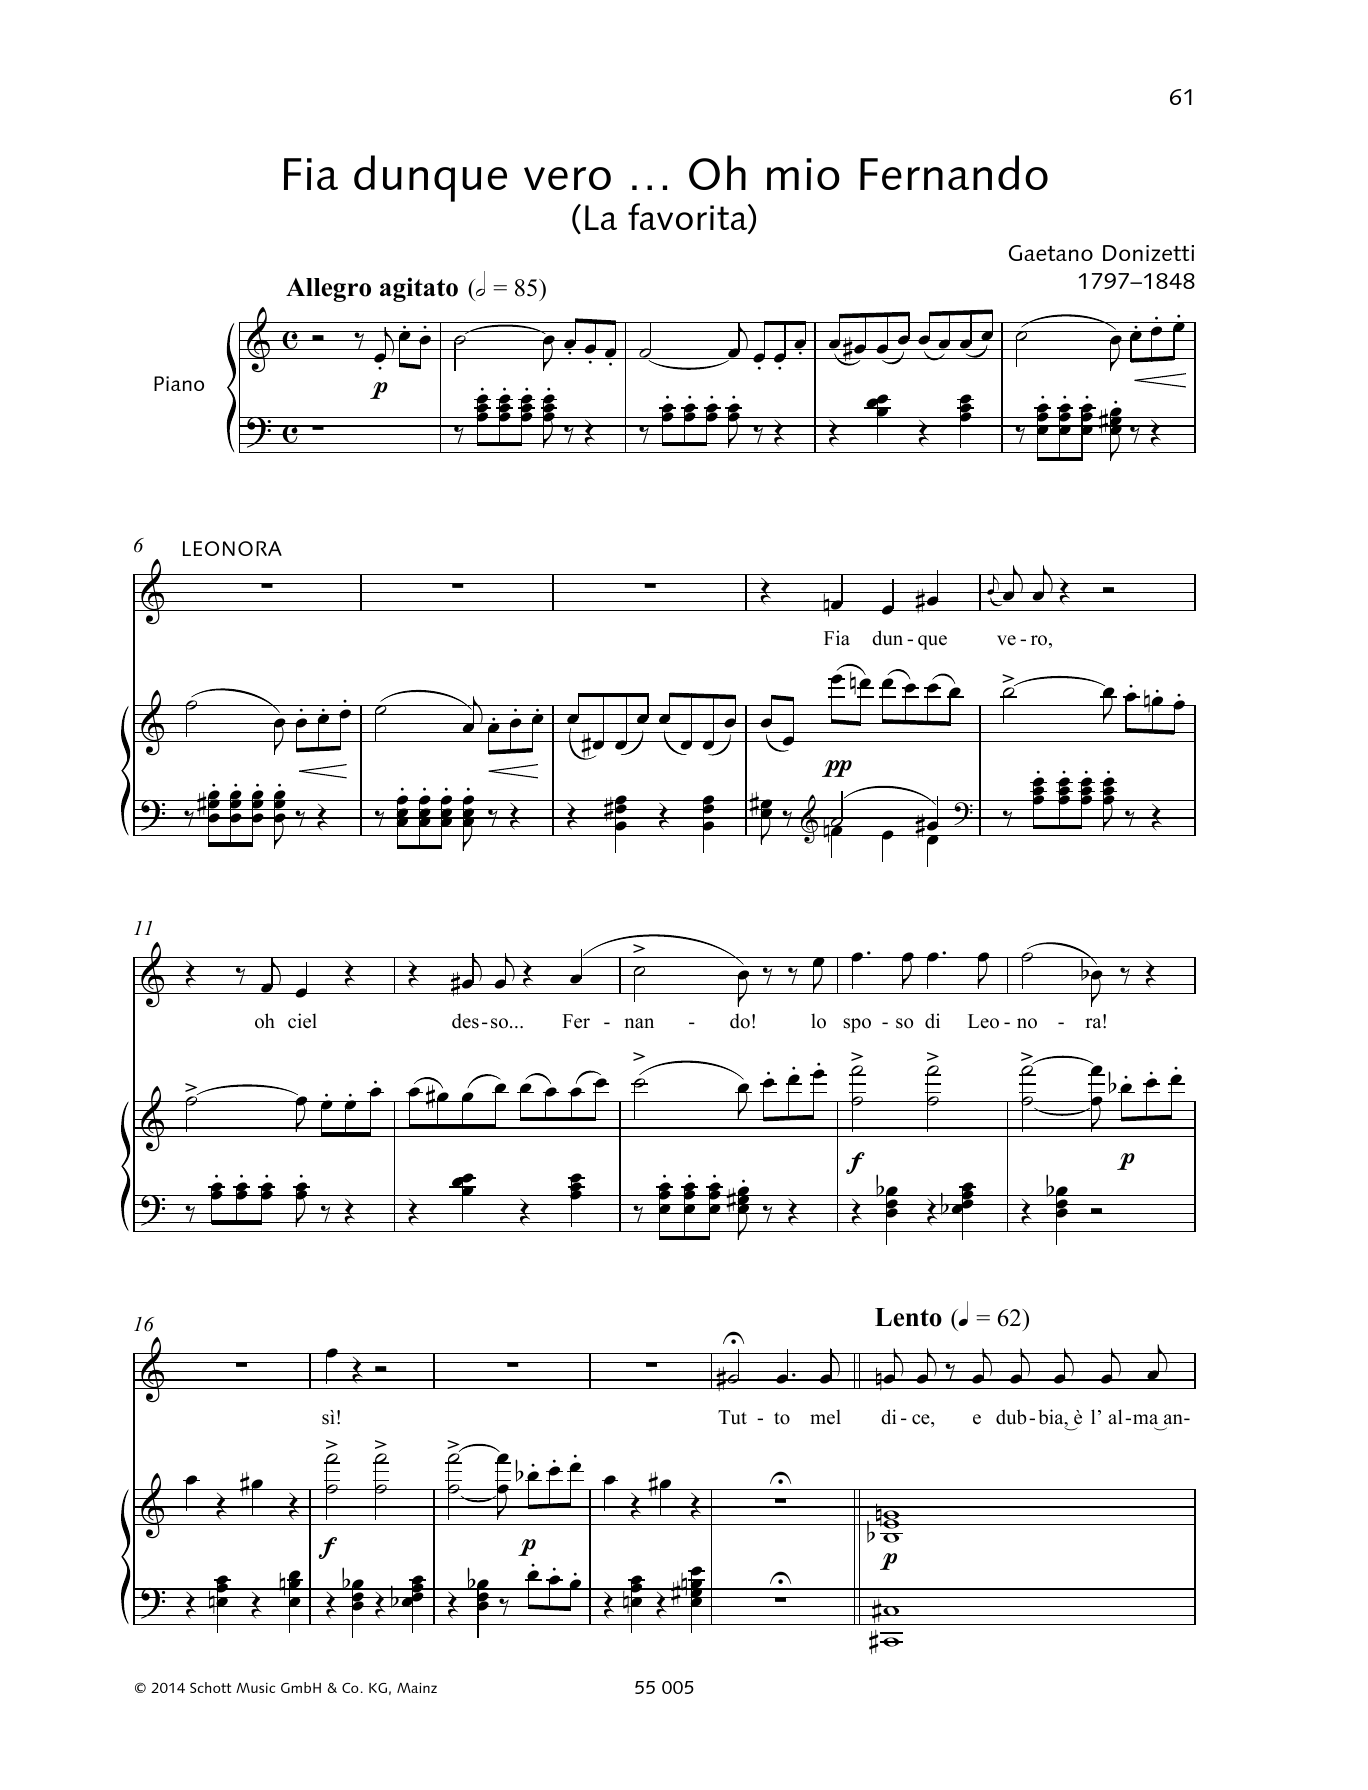 Download Gaetano Donizetti Fia dunque vero... Oh mio Fernando Sheet Music and learn how to play Piano & Vocal PDF digital score in minutes